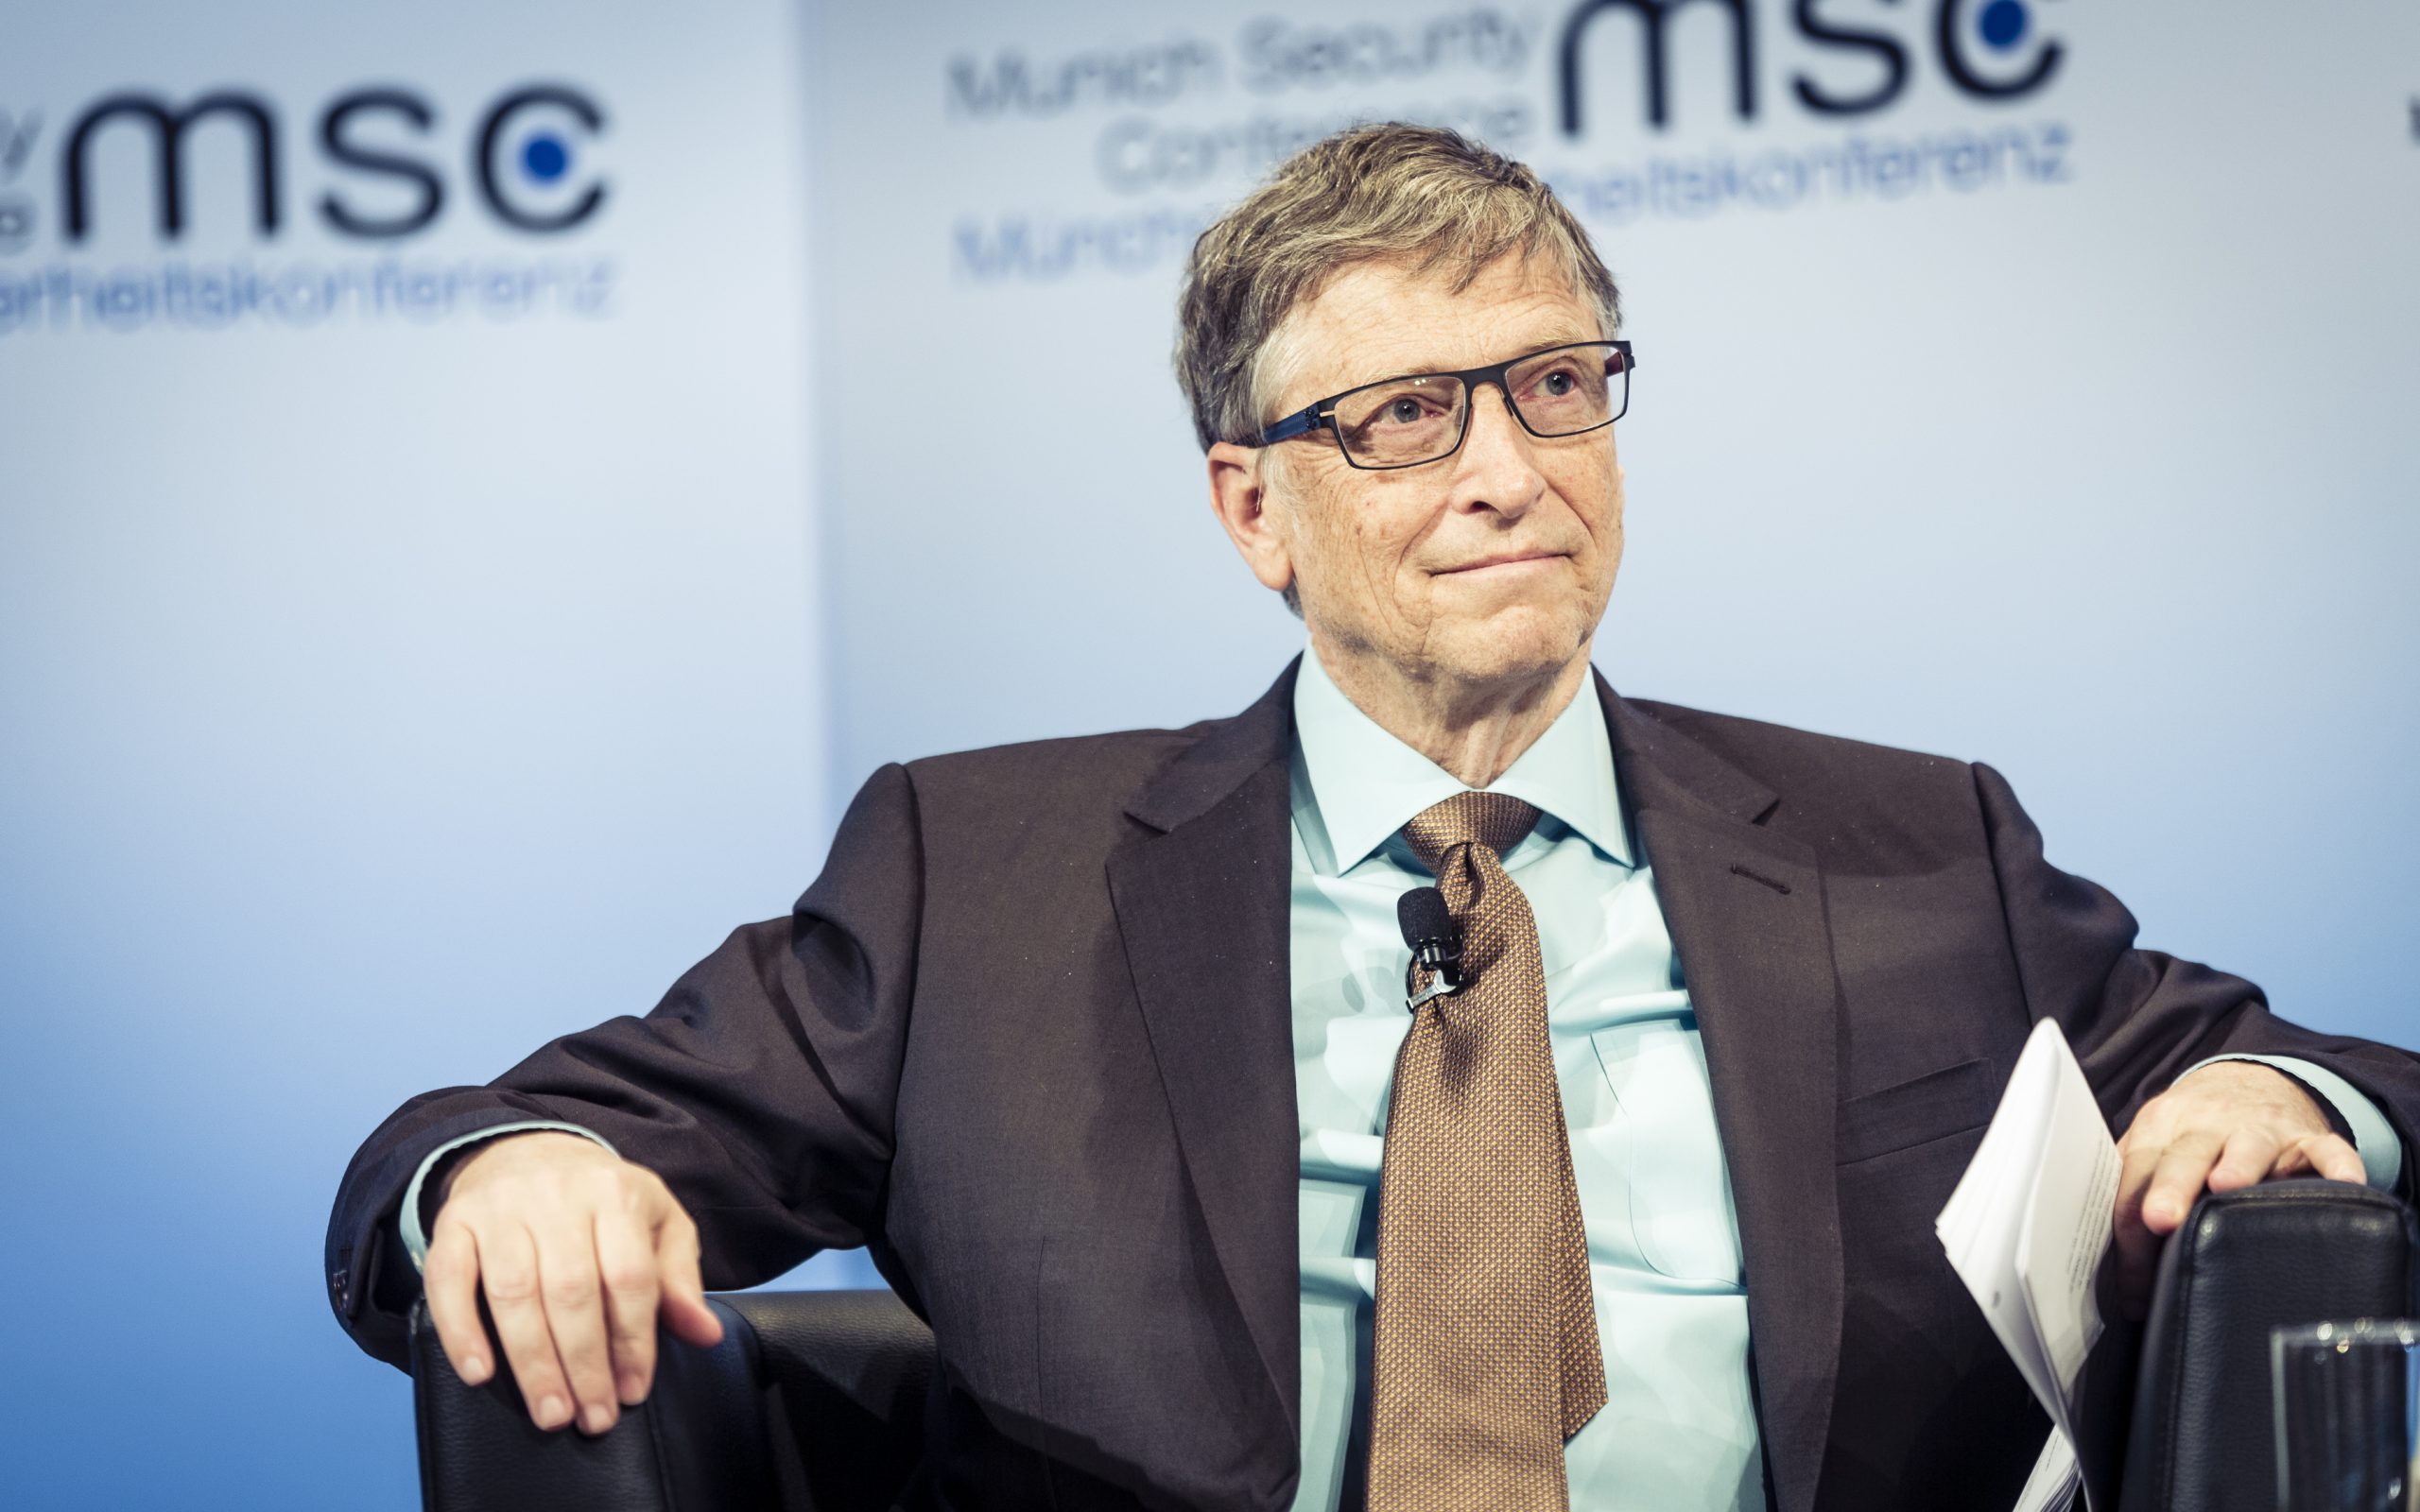 Bill Gates Slams Trump’s WHO Cuts: ‘As Dangerous As It Sounds’